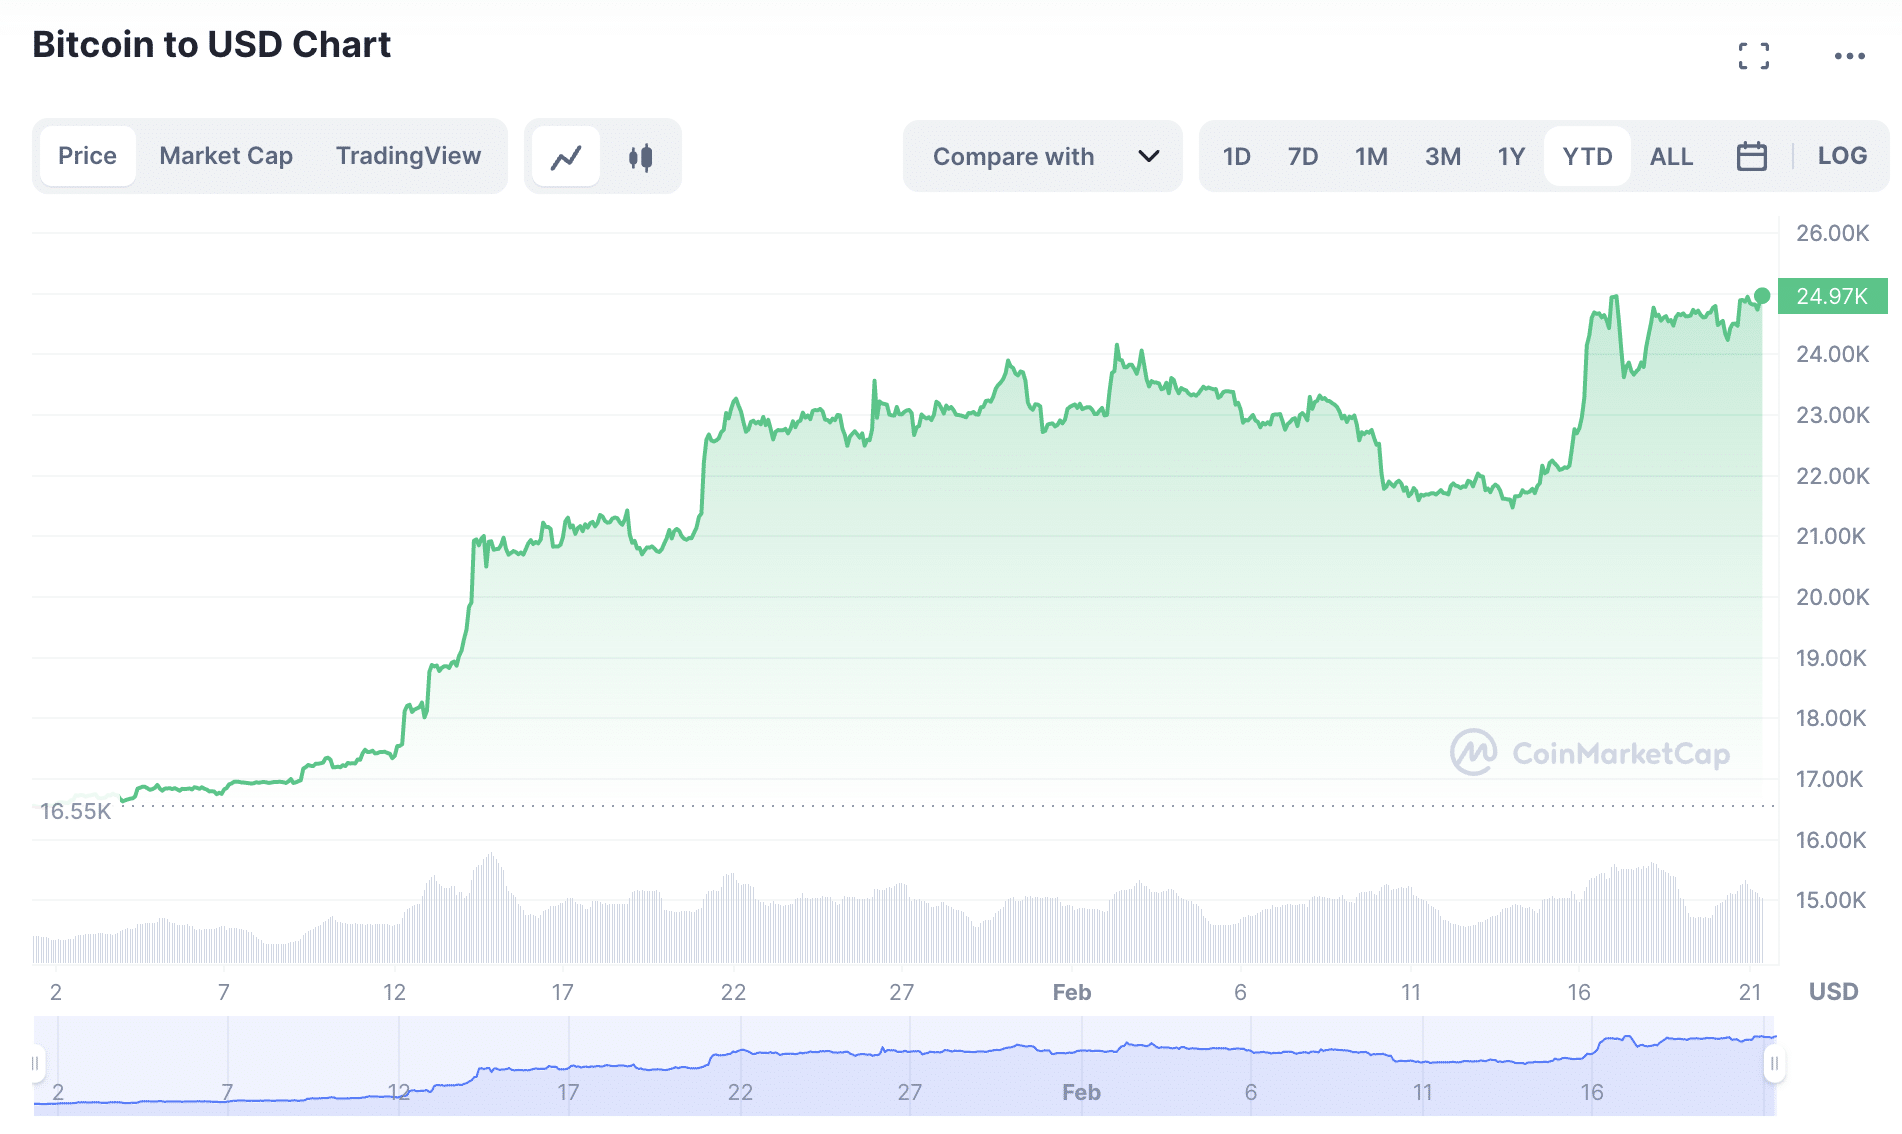 Bitcoin Year to Date Price Chart